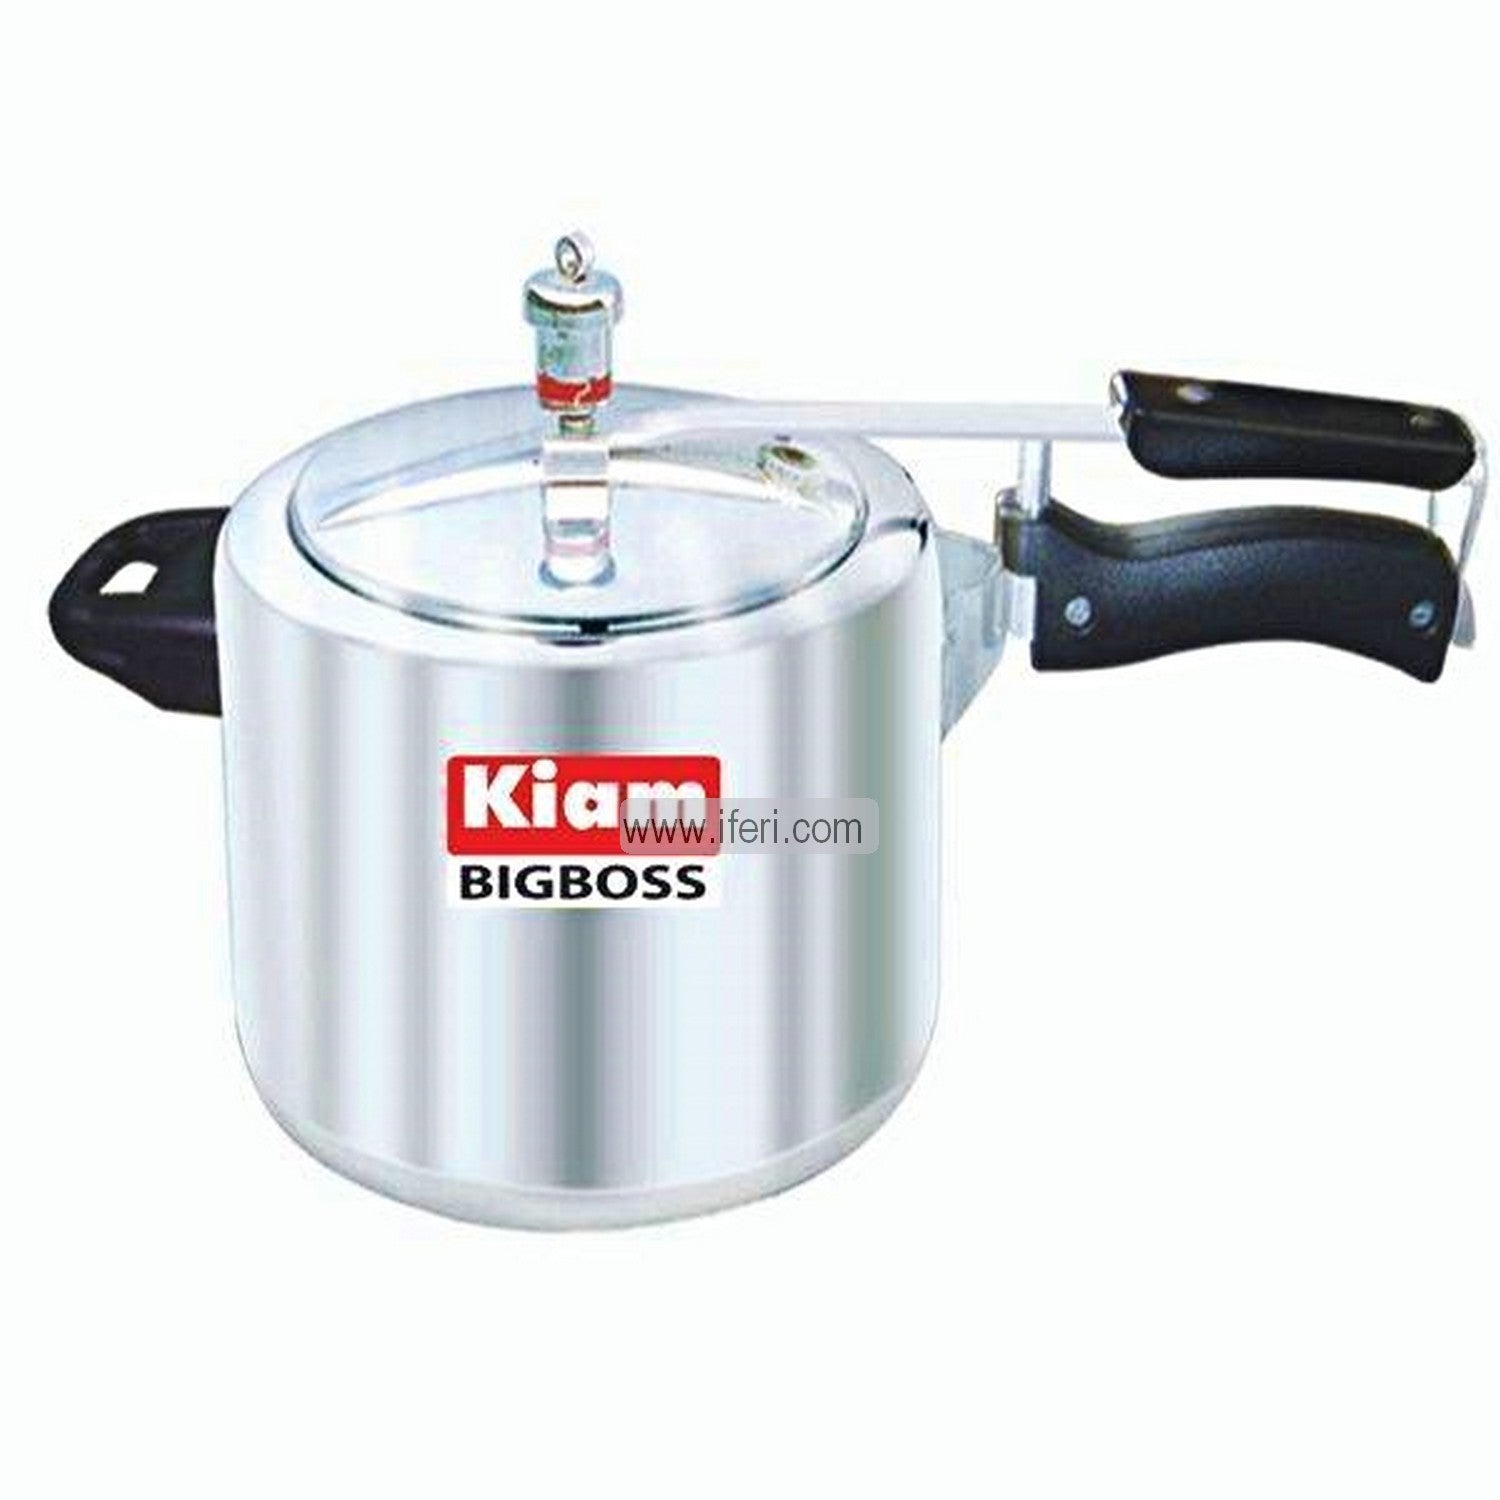 10.5 liter Kiam Classic pressure-cooker BCG3317